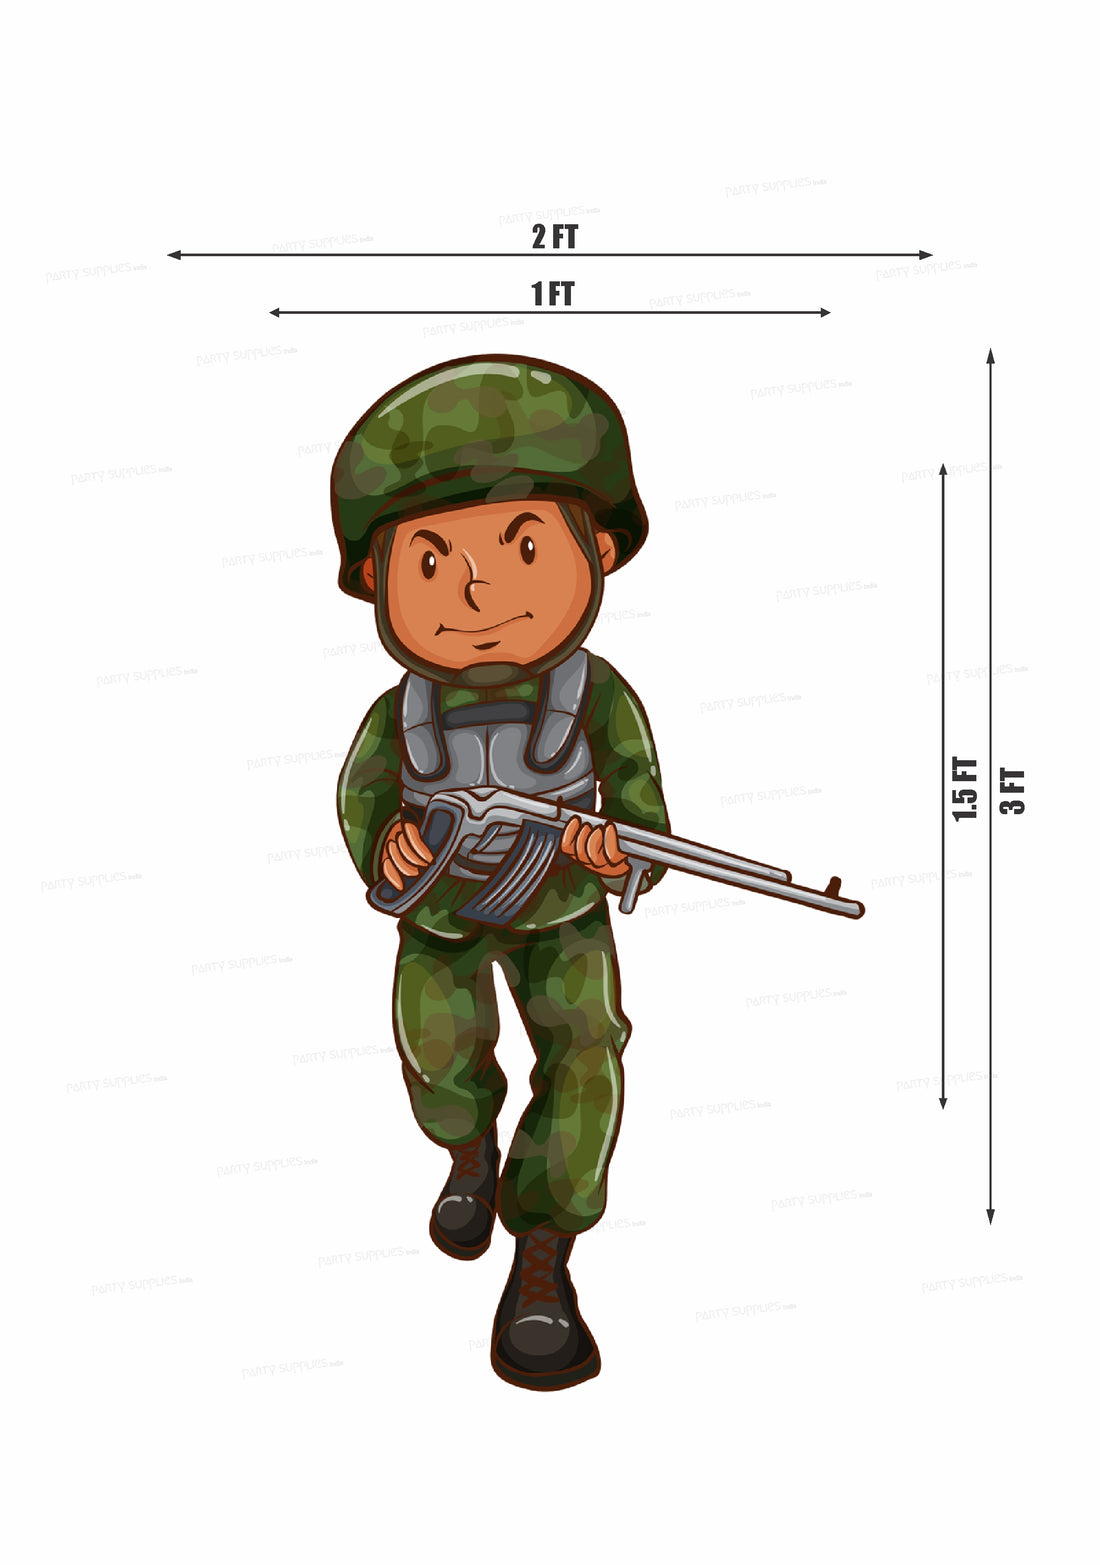 PSI Military Theme Cutout - 04